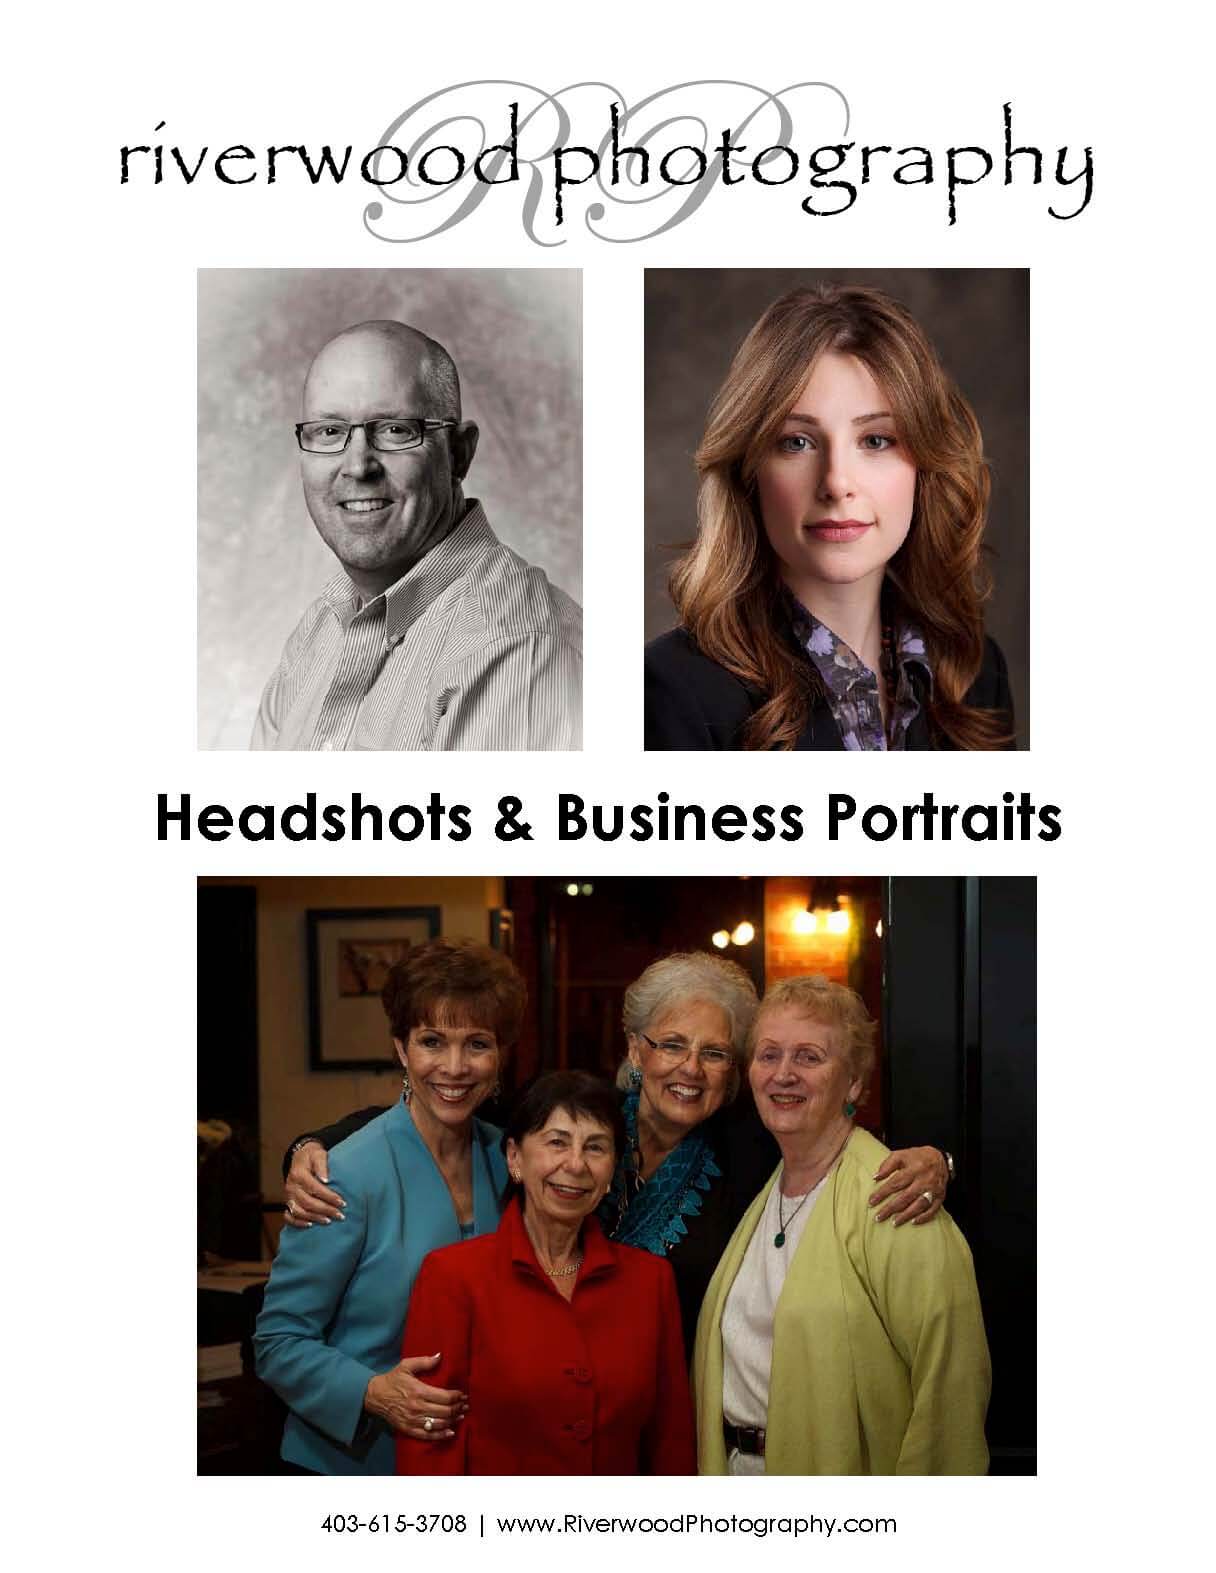 Headshots & Business Portrait Pricing Guide